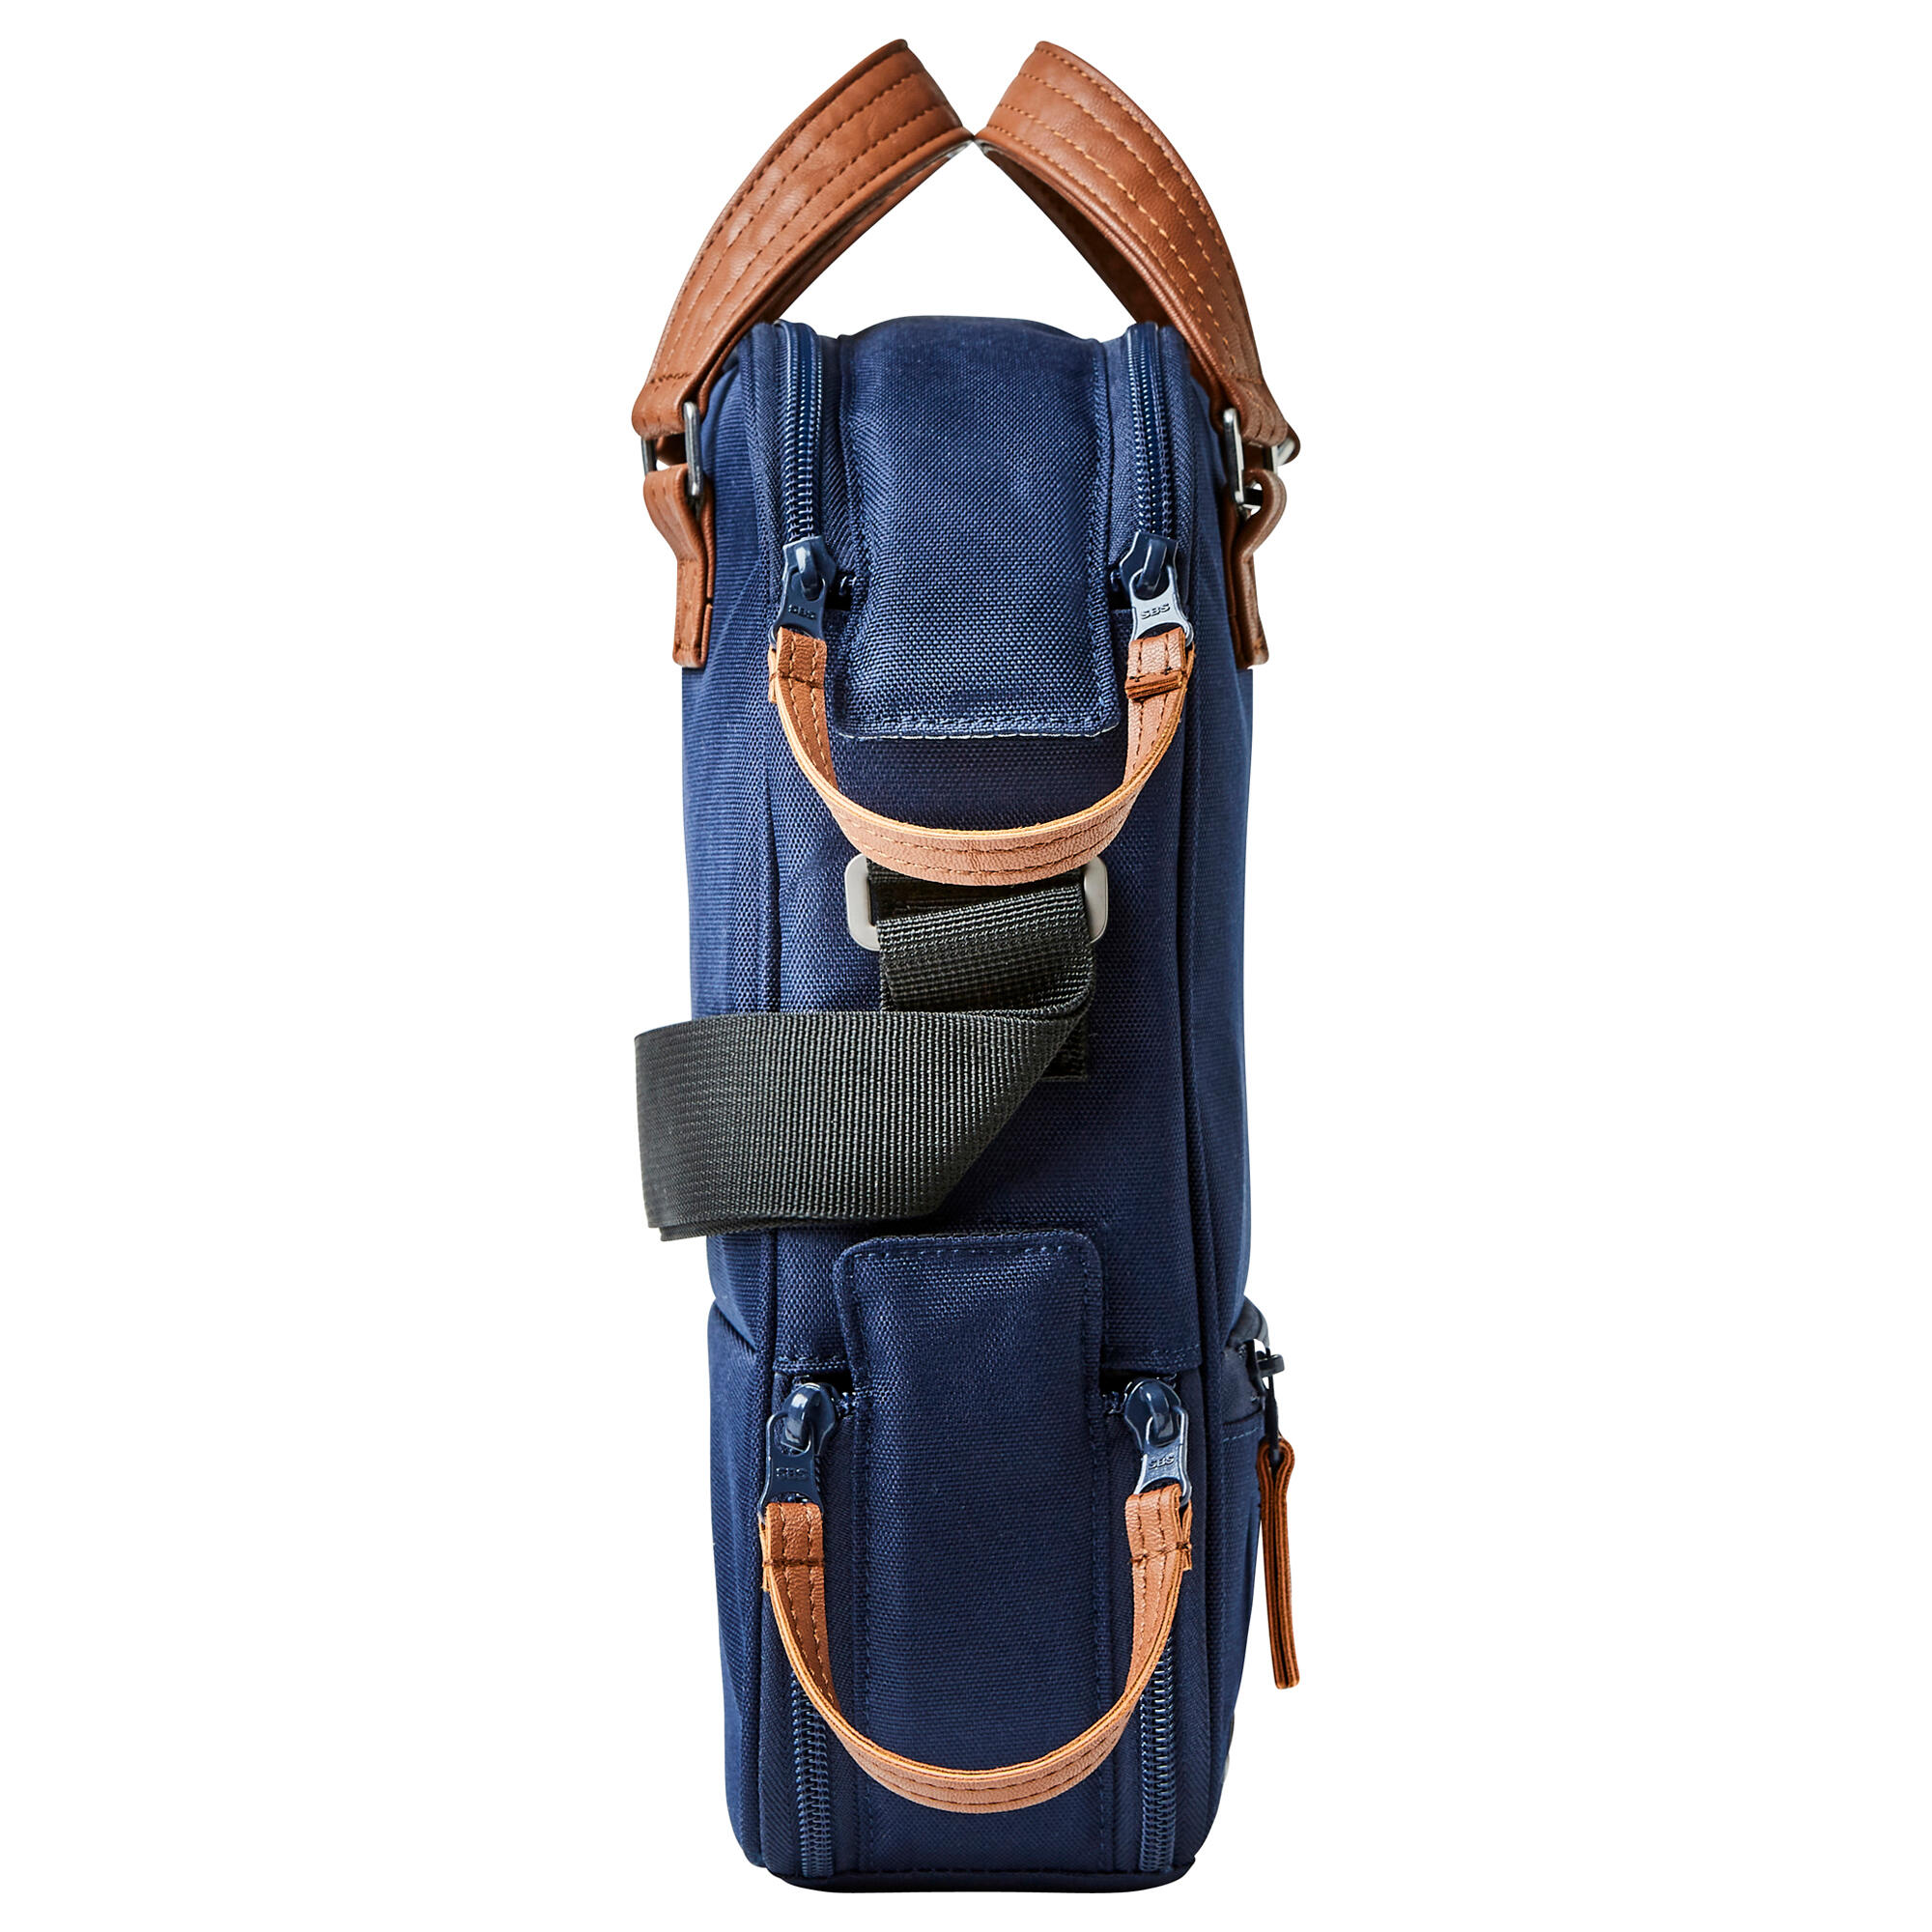 Petanque Semi-Rigid Bag for 3 Petanque Boules and Accessories - KOODZA